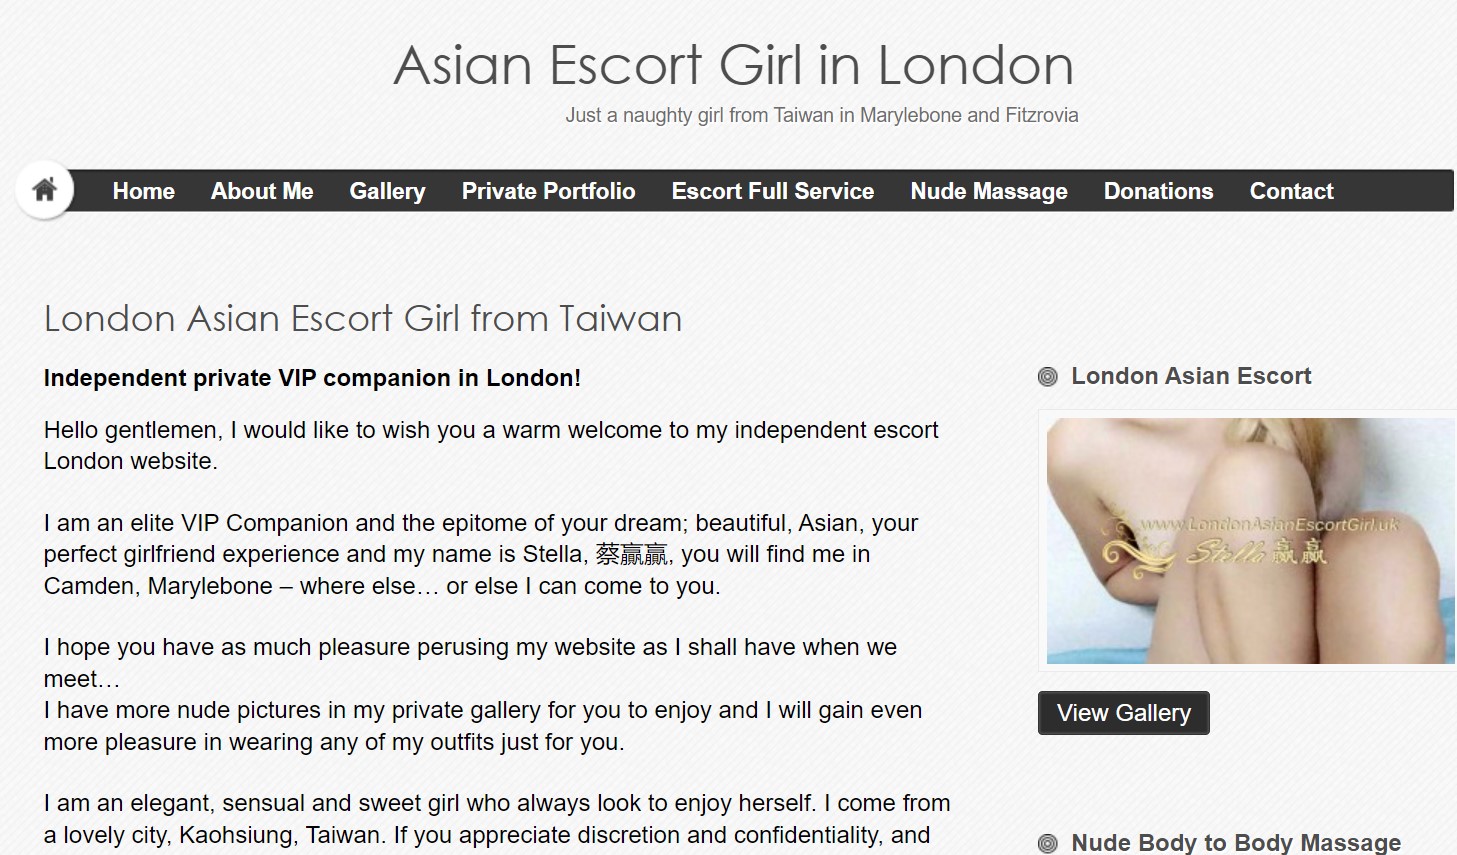 London Asian Escort Girl from Taiwan